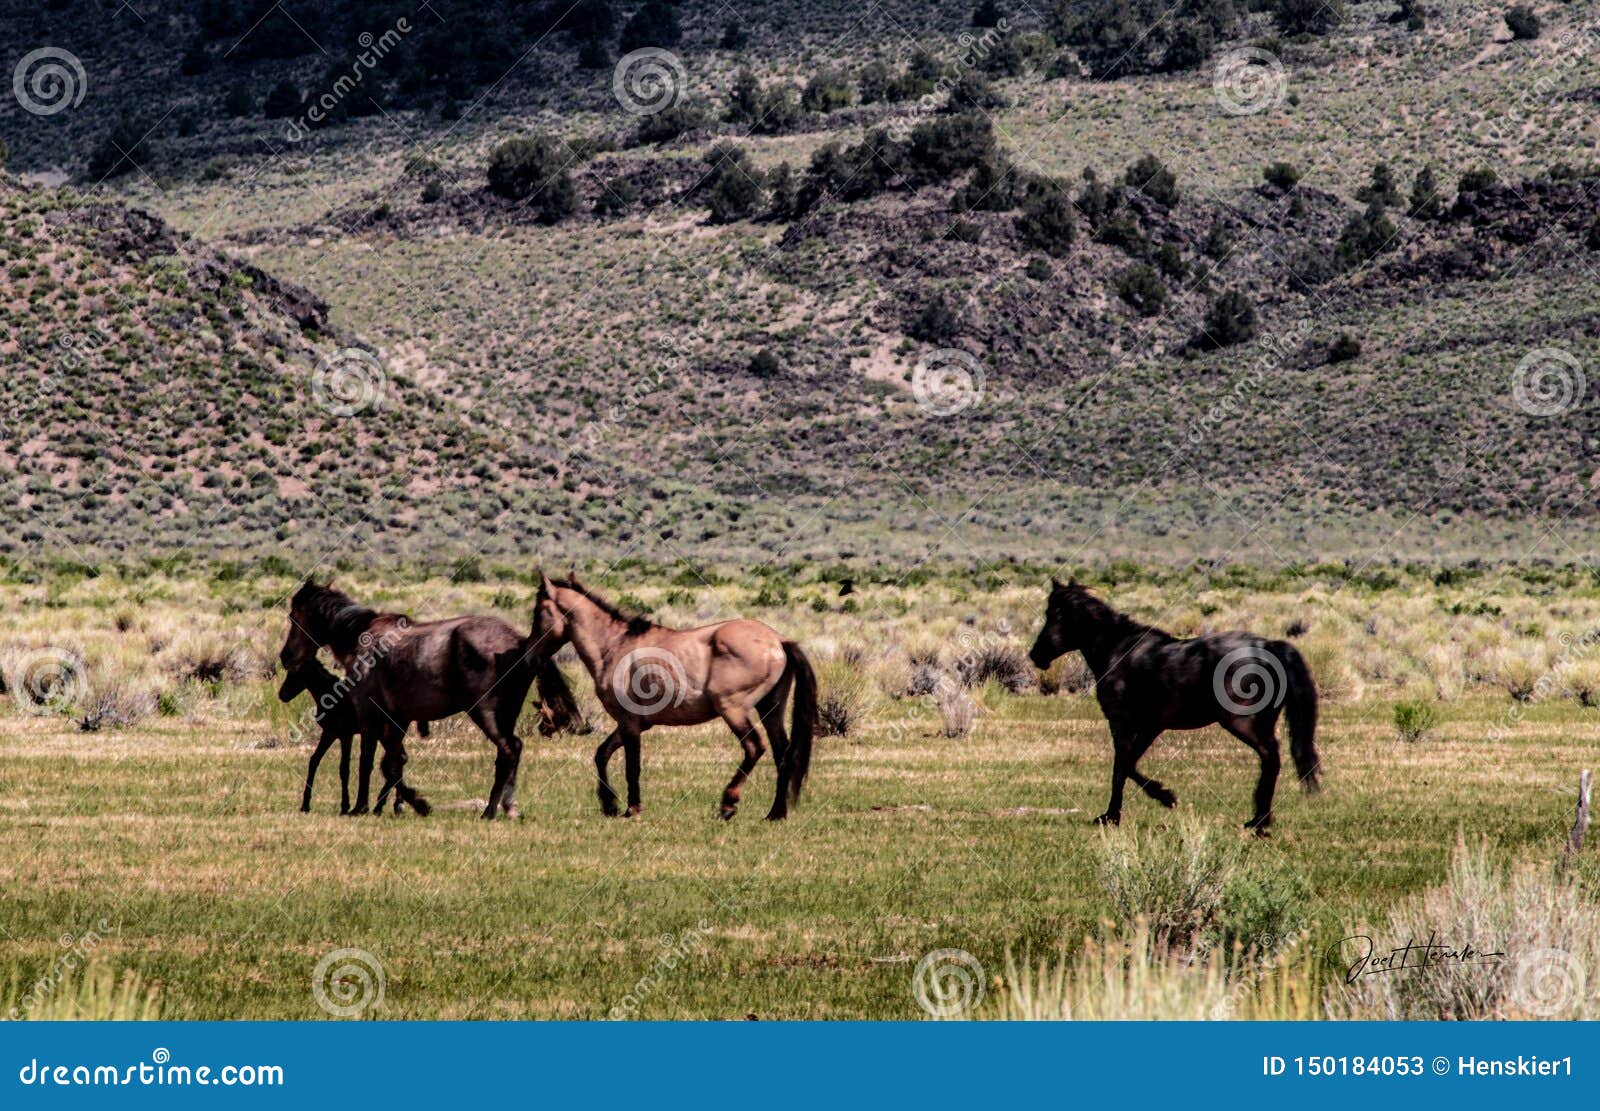 wild horses on blm land near california highway 120